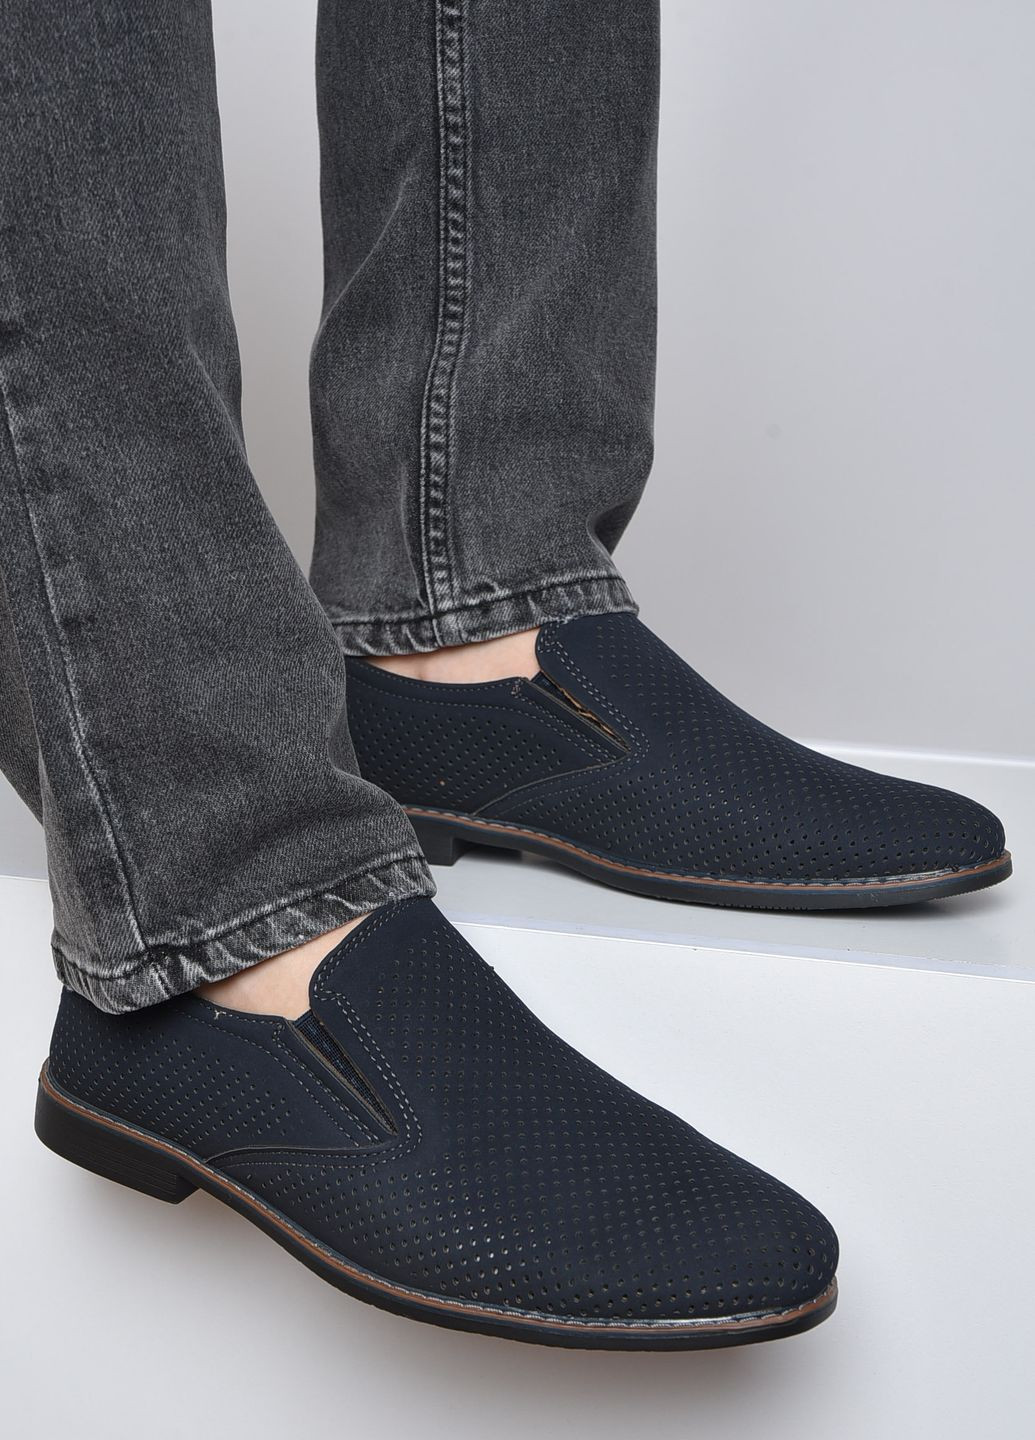 Темно-синие классические туфли мужские темно-синего цвета Let's Shop без шнурков